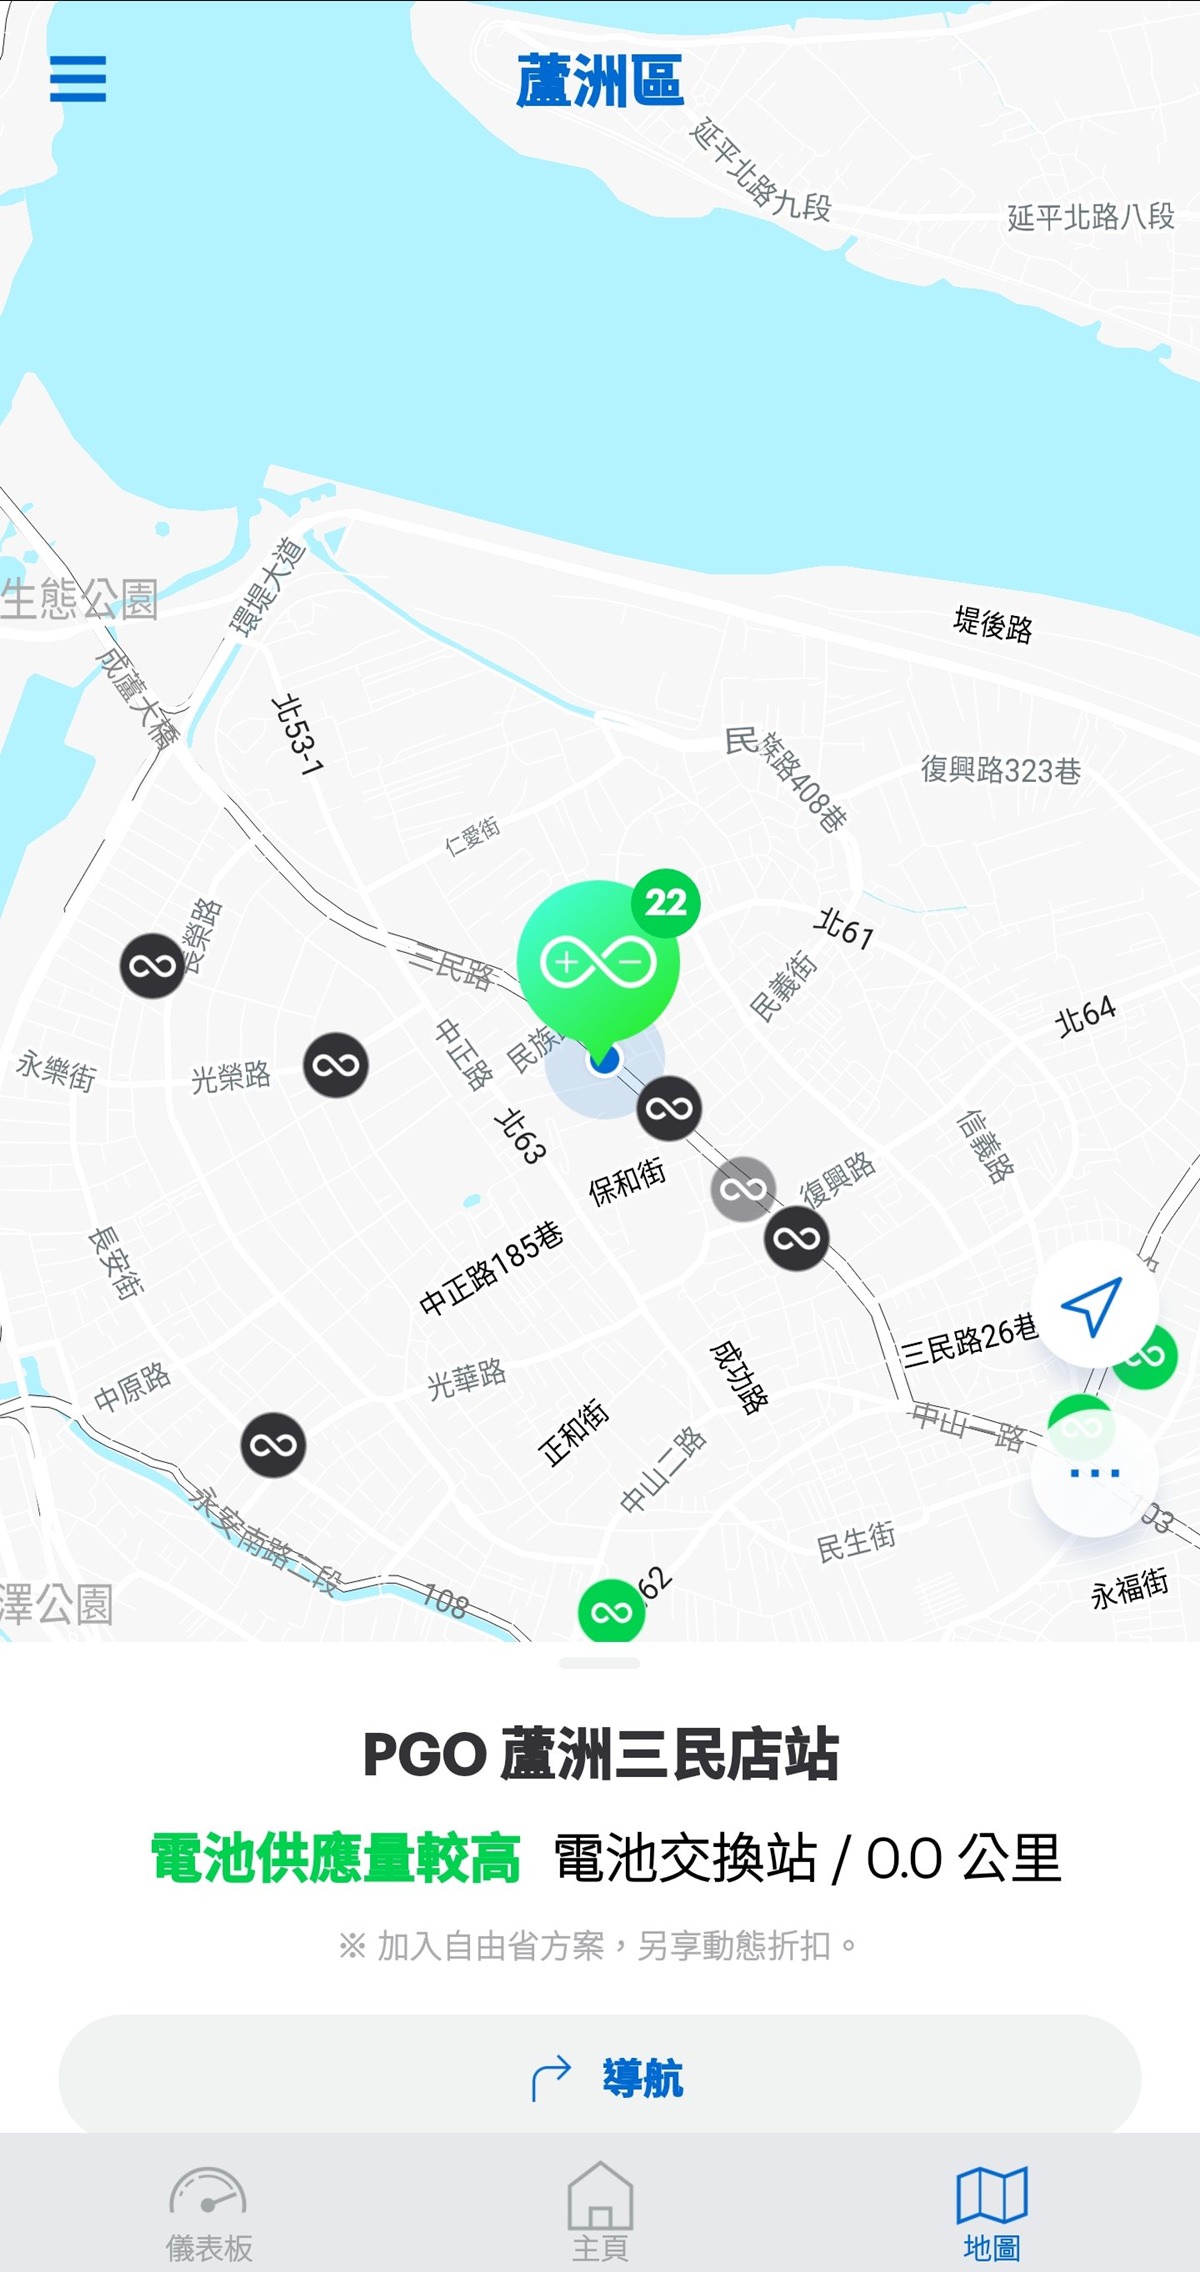 Gogoro Network 新功能：綠點讓我快速找到推薦站點，找好站再出發，輕鬆帶小孩出遊